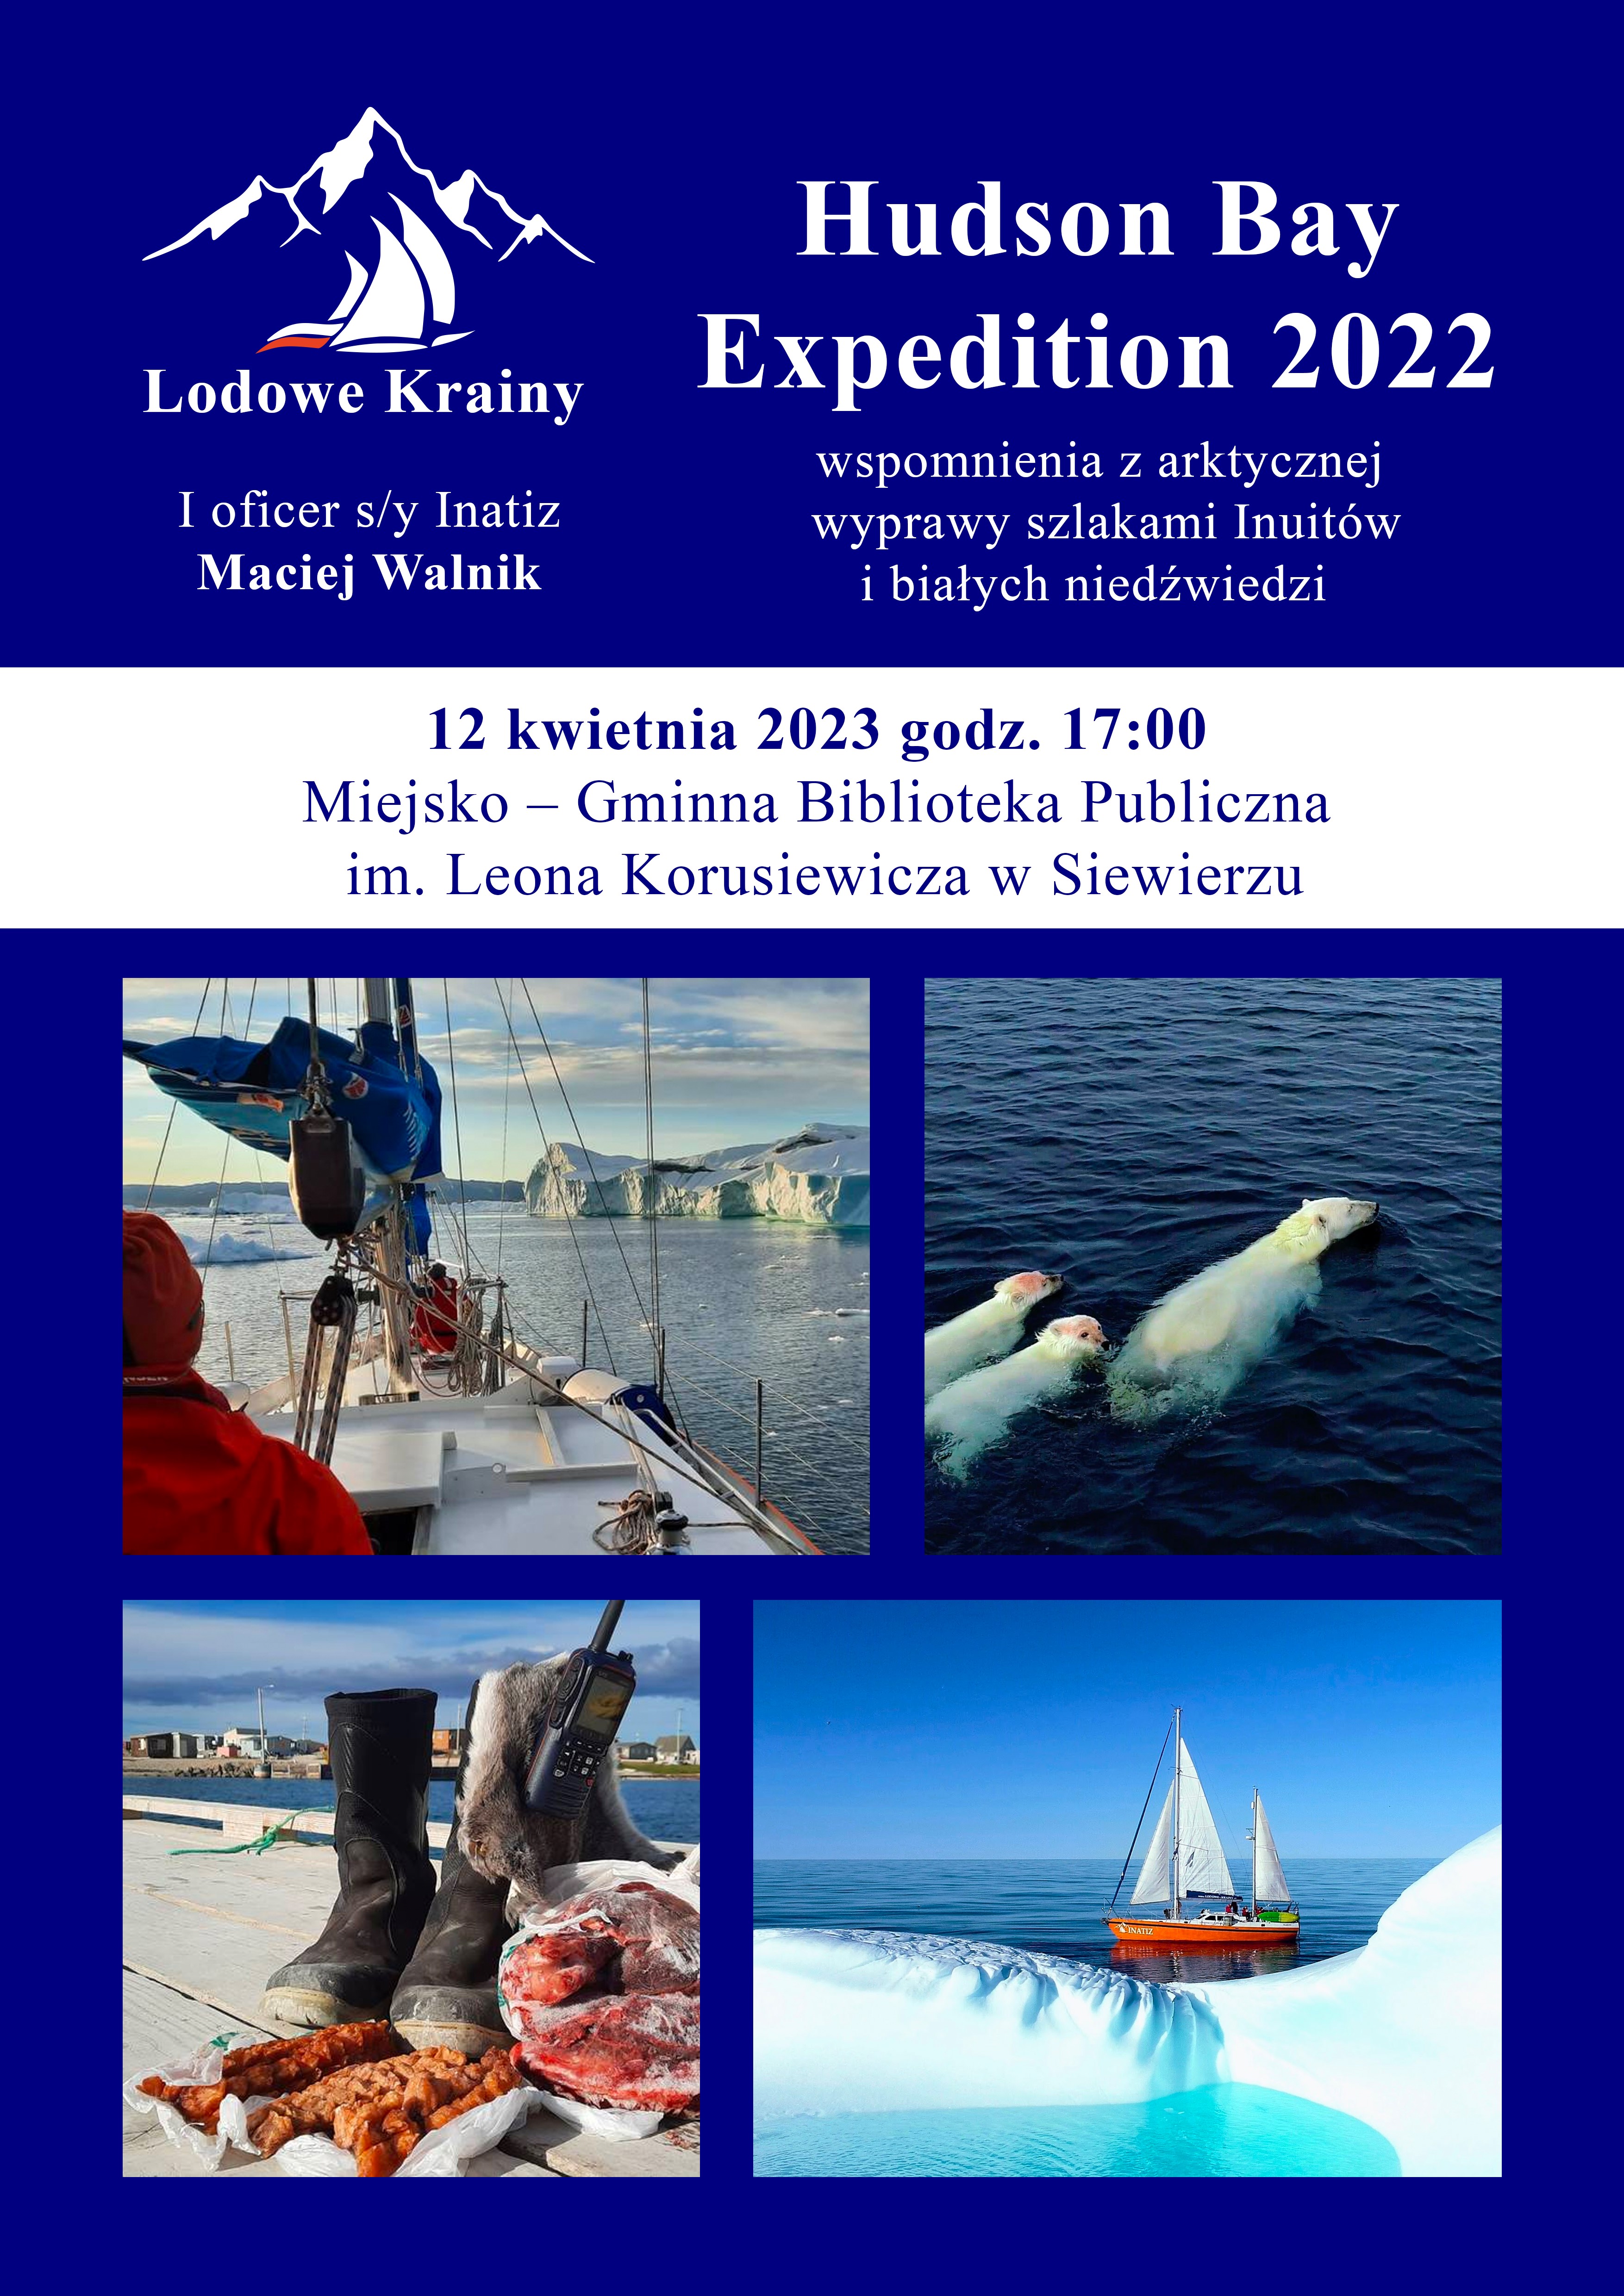 Hudson Bay Expedition 2022